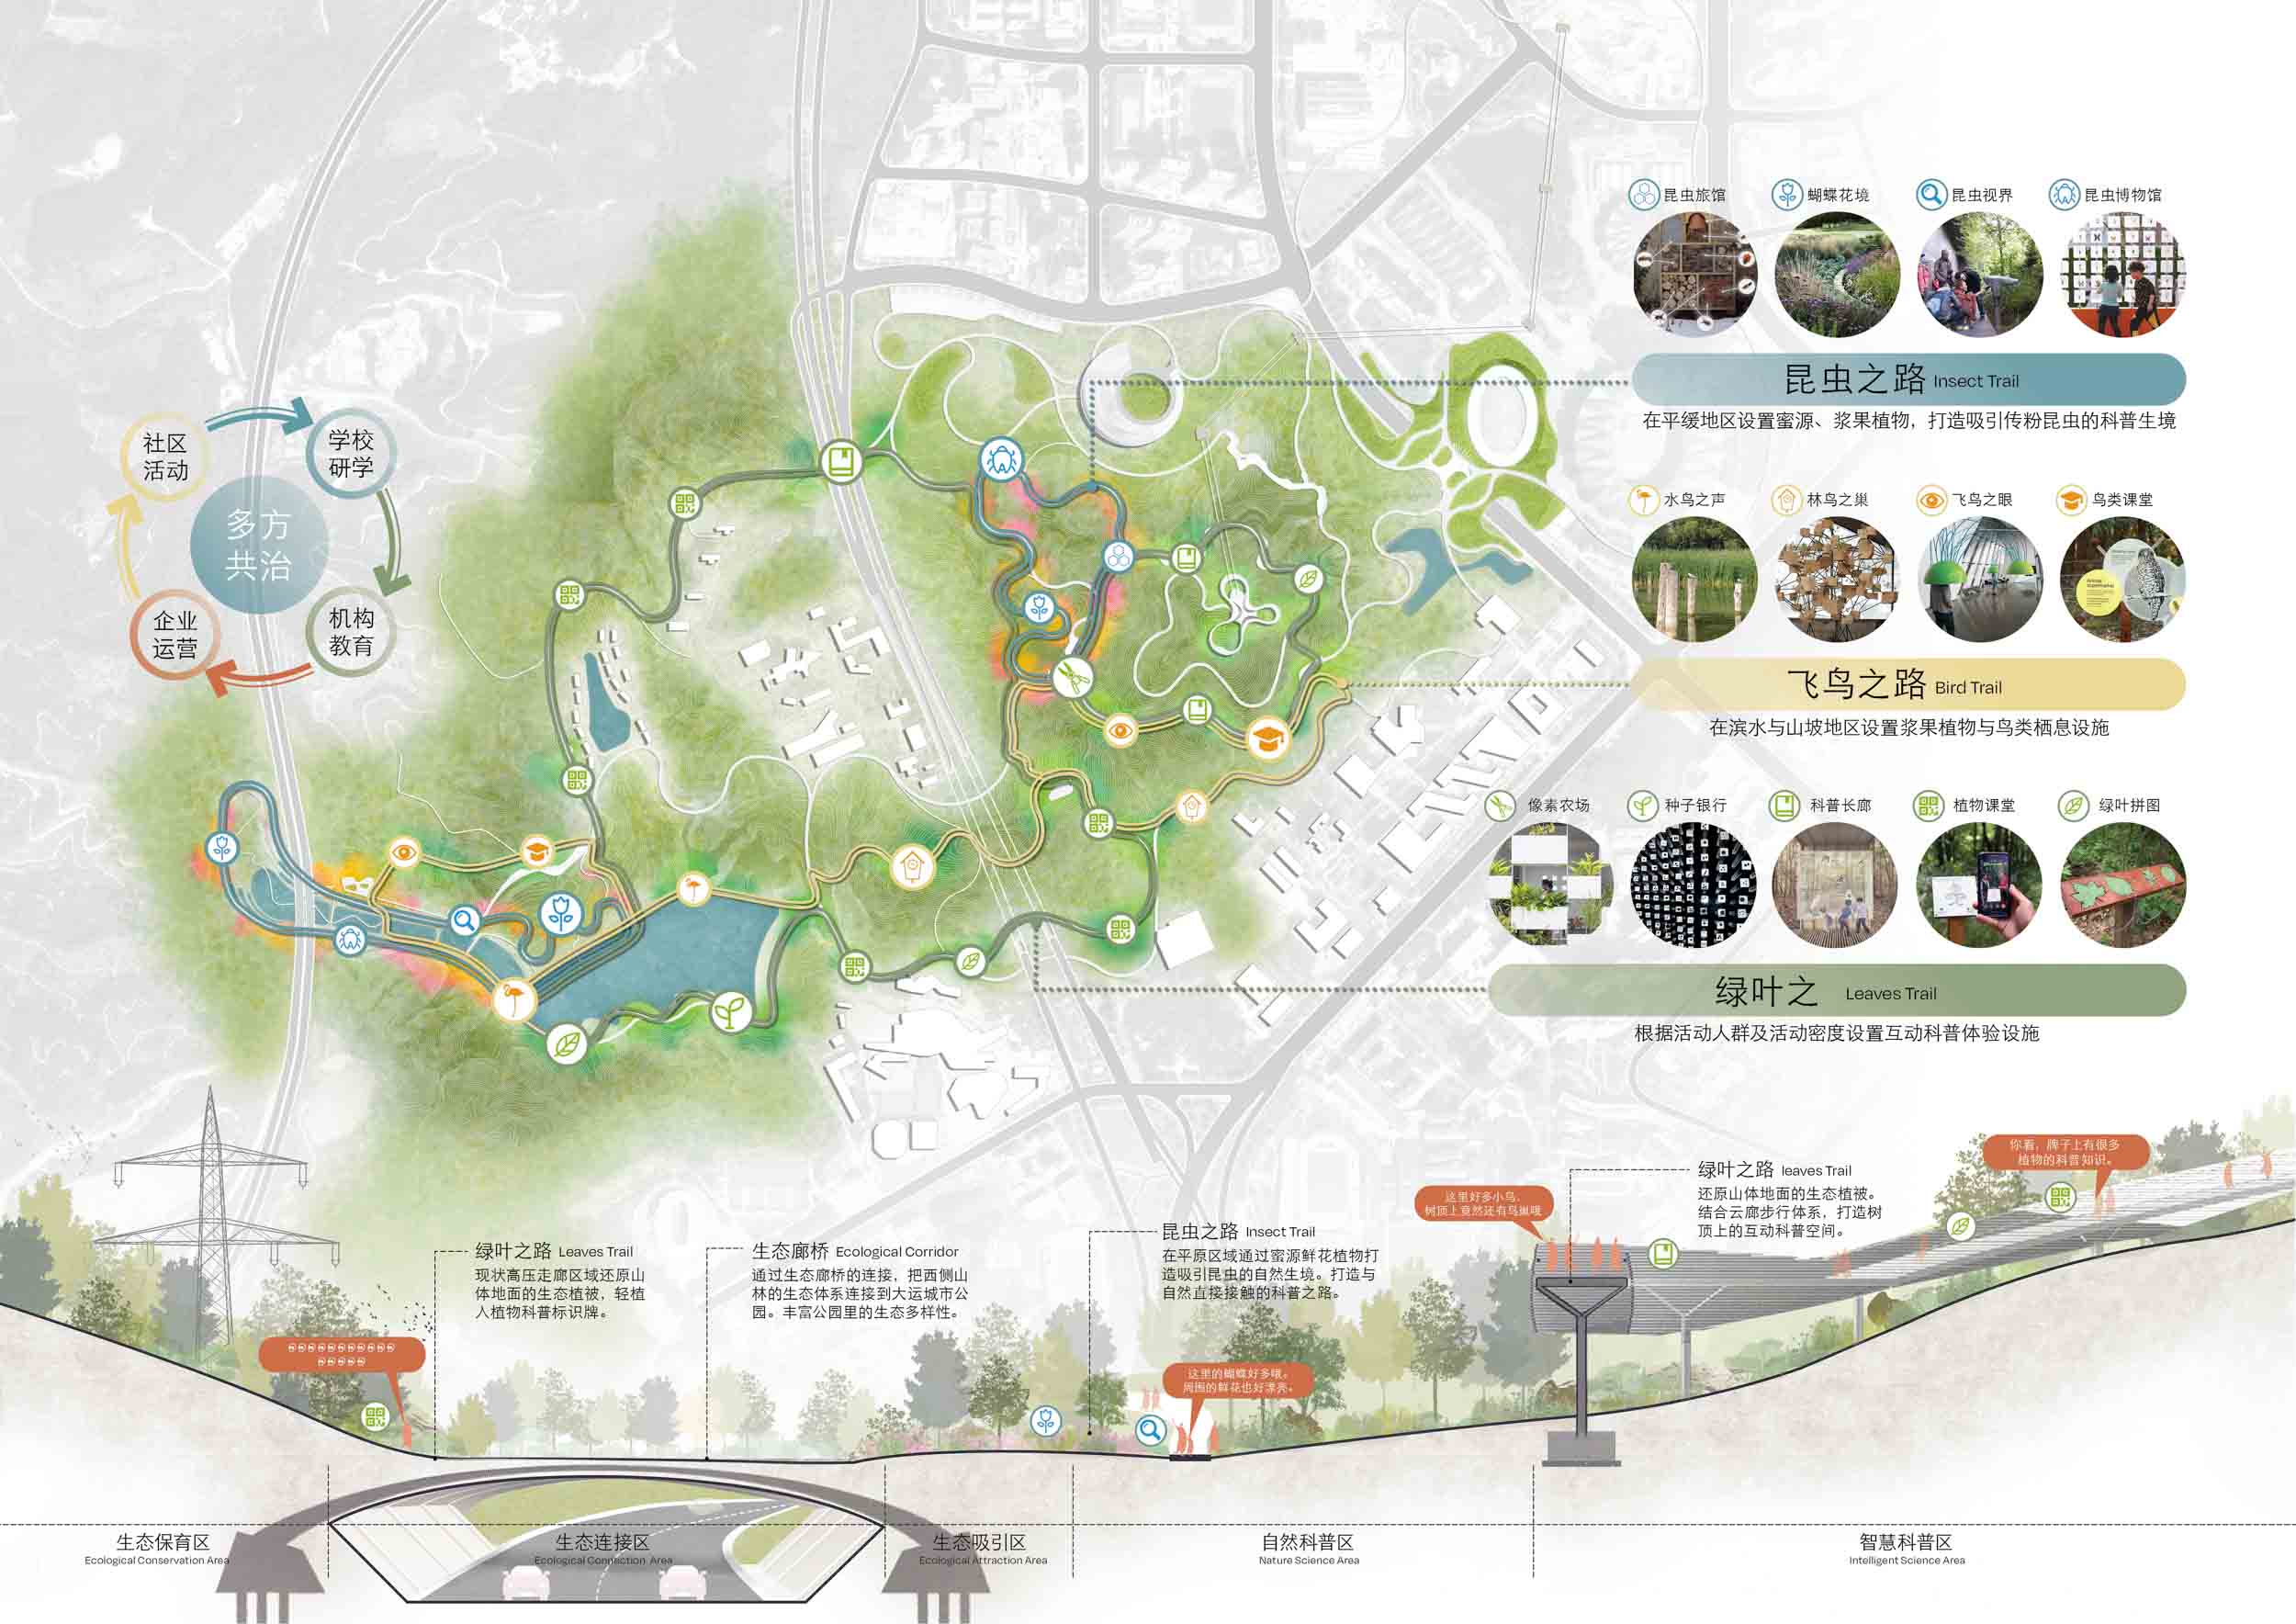 Universiade i-Park ecology and interactive technology visual